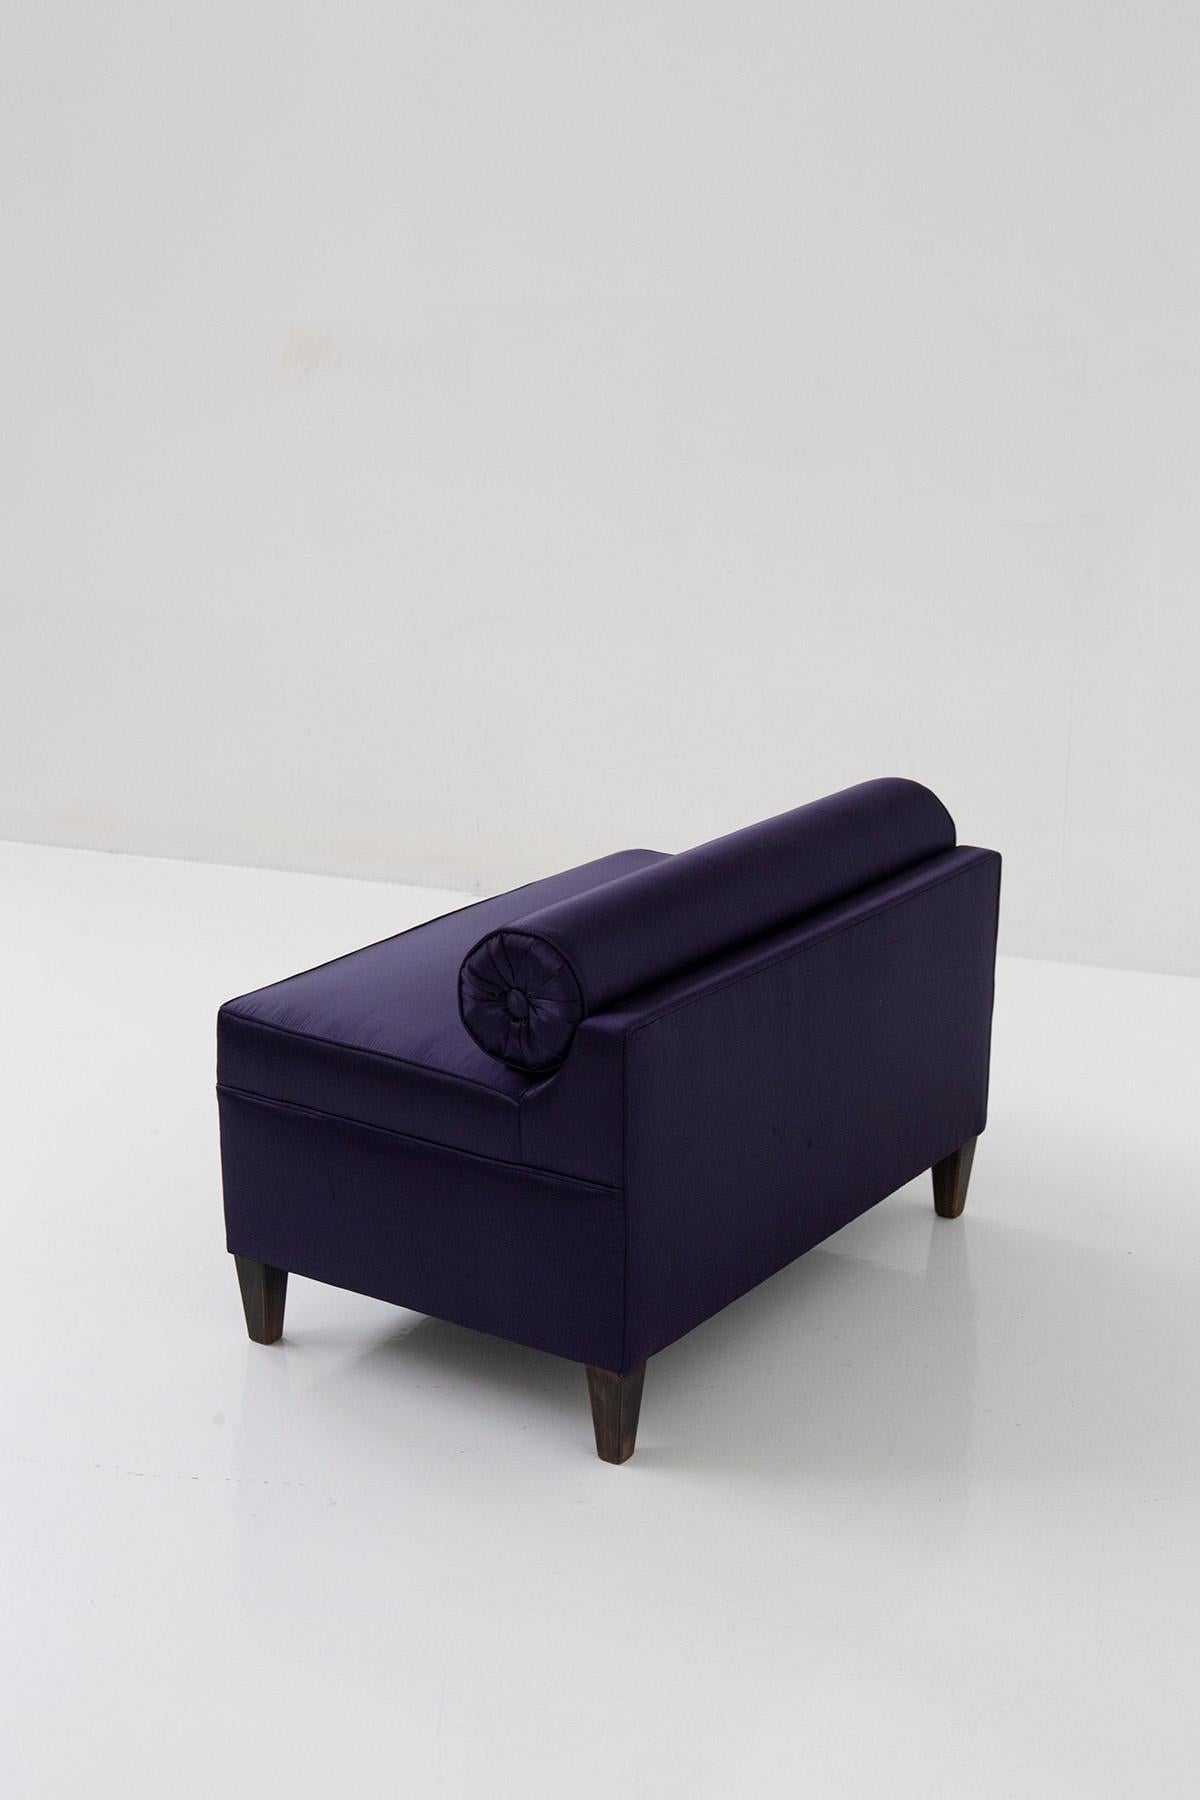 Small Italian Purple Satin Sofa with Roll Cushion For Sale 3